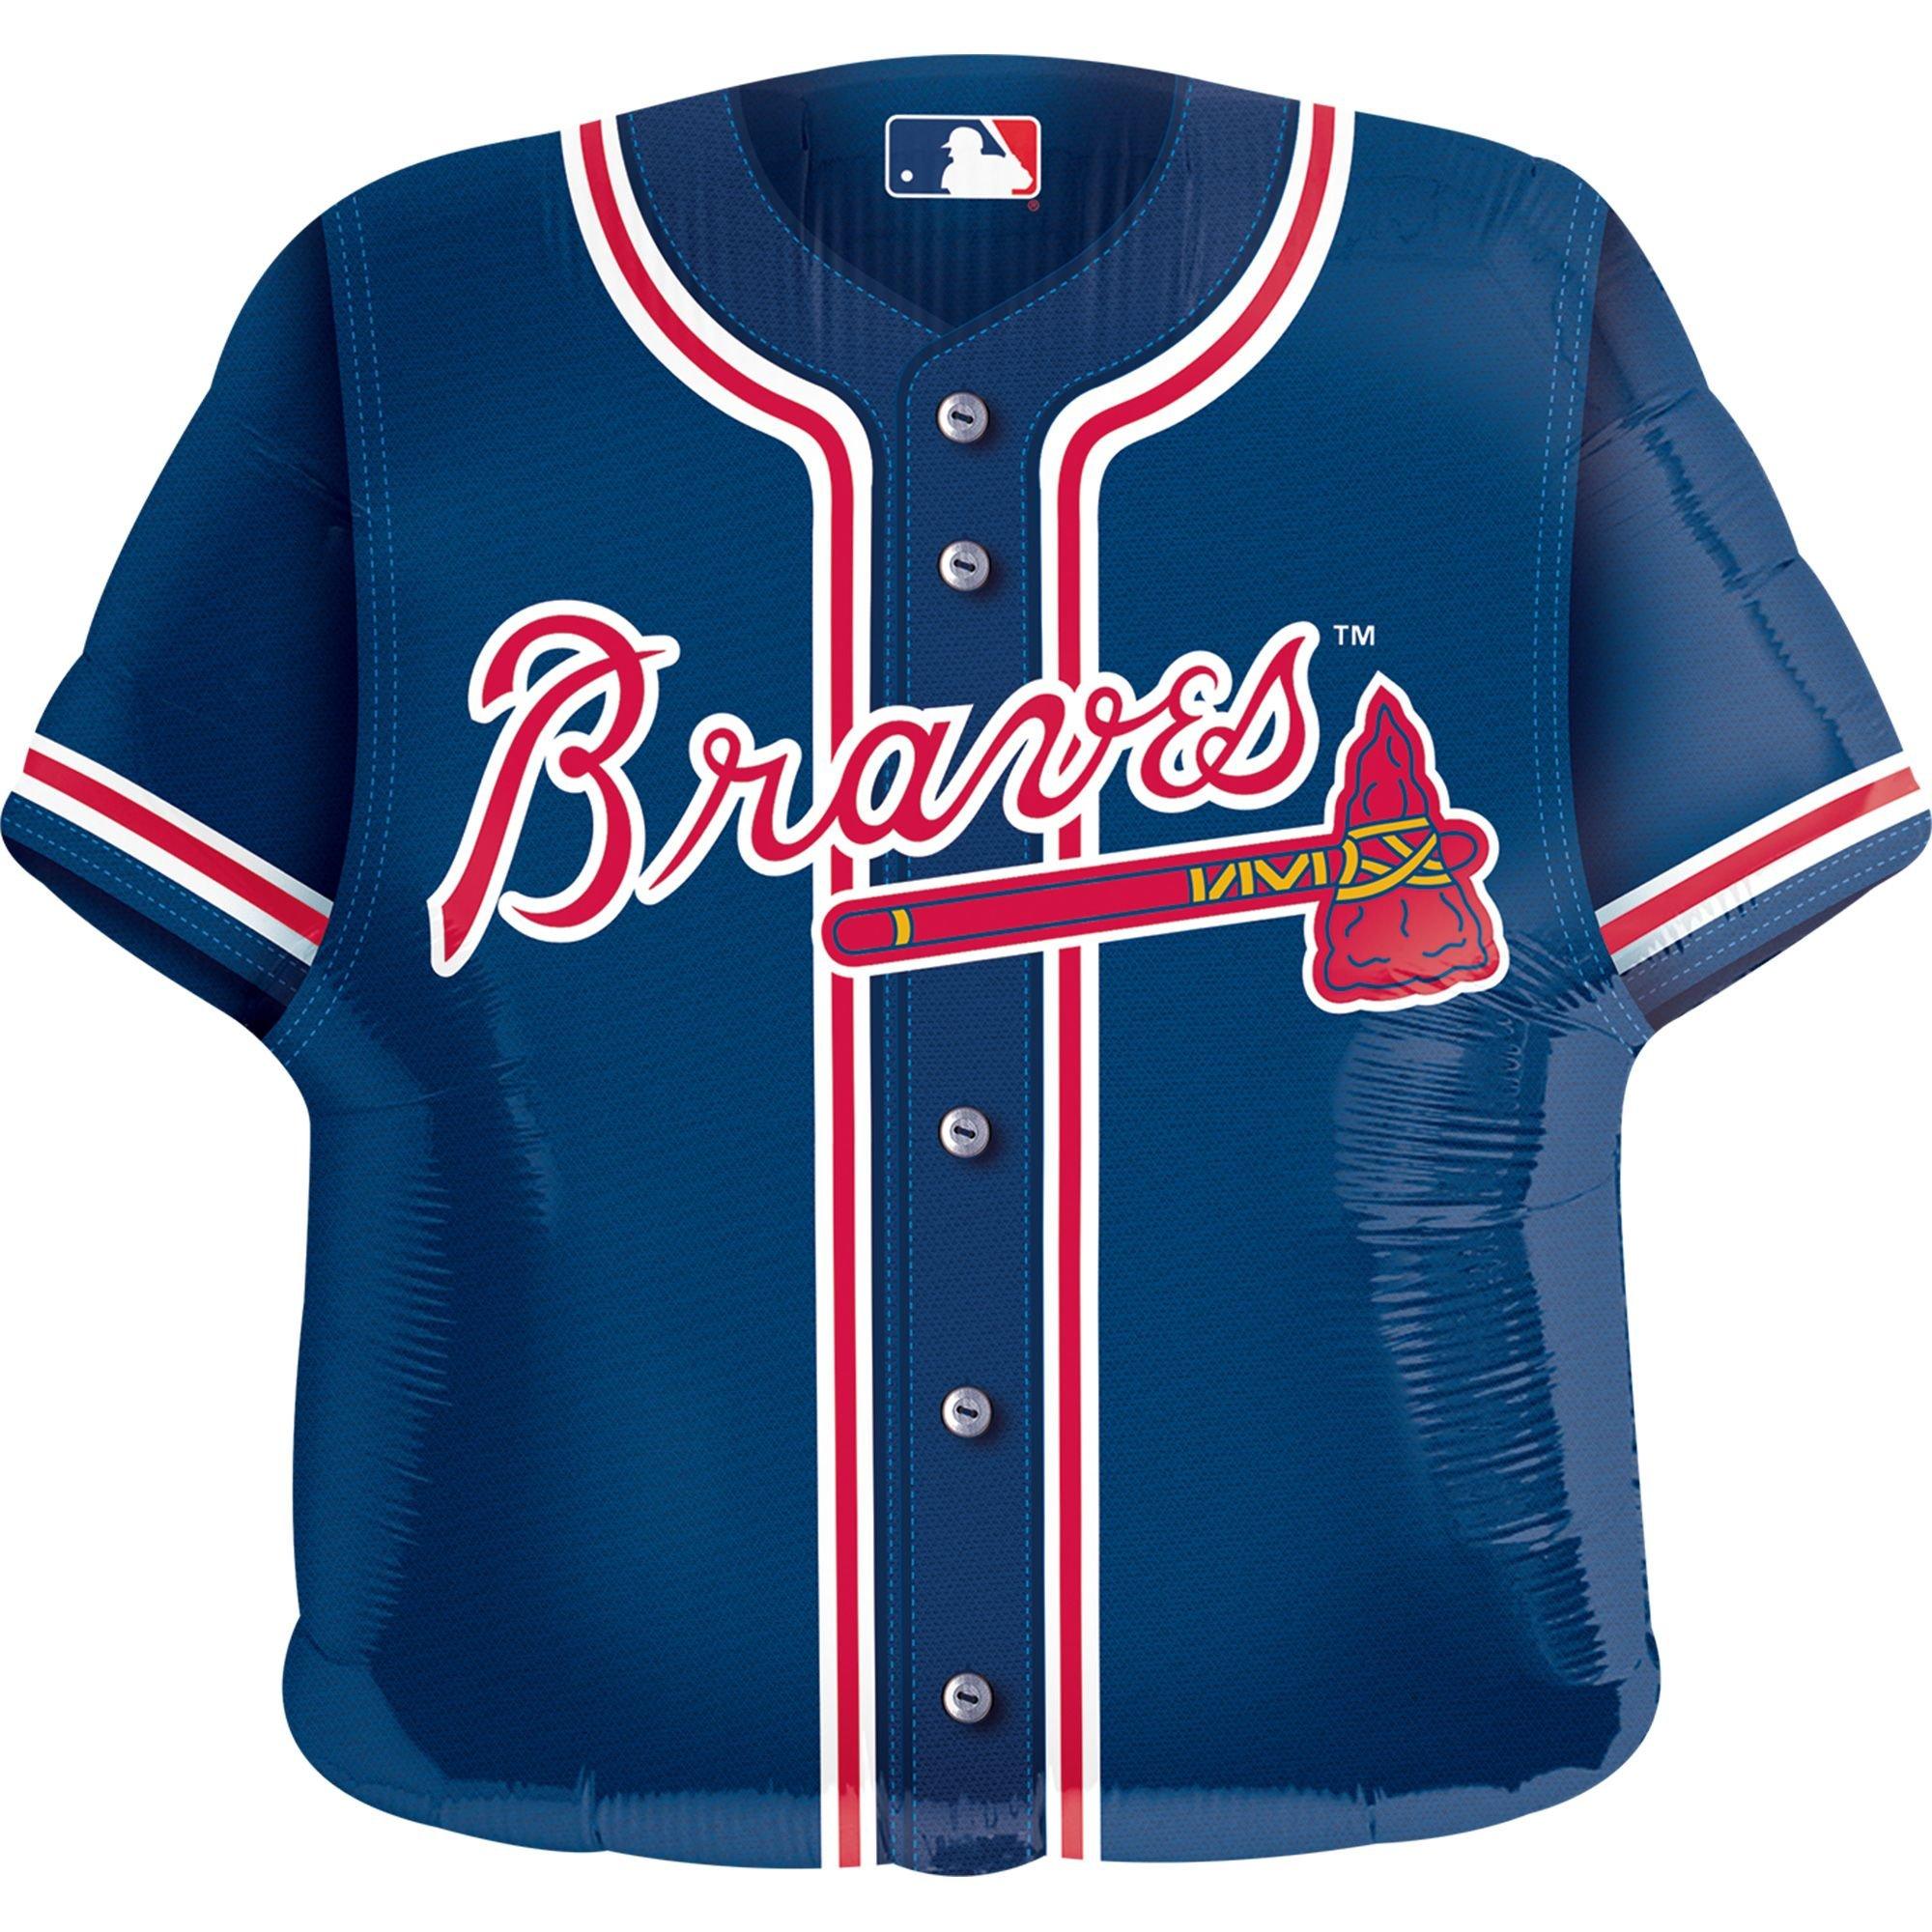 Per User on Twitter Atlanta Braves City Connect Jerseys on displays:    : r/Braves